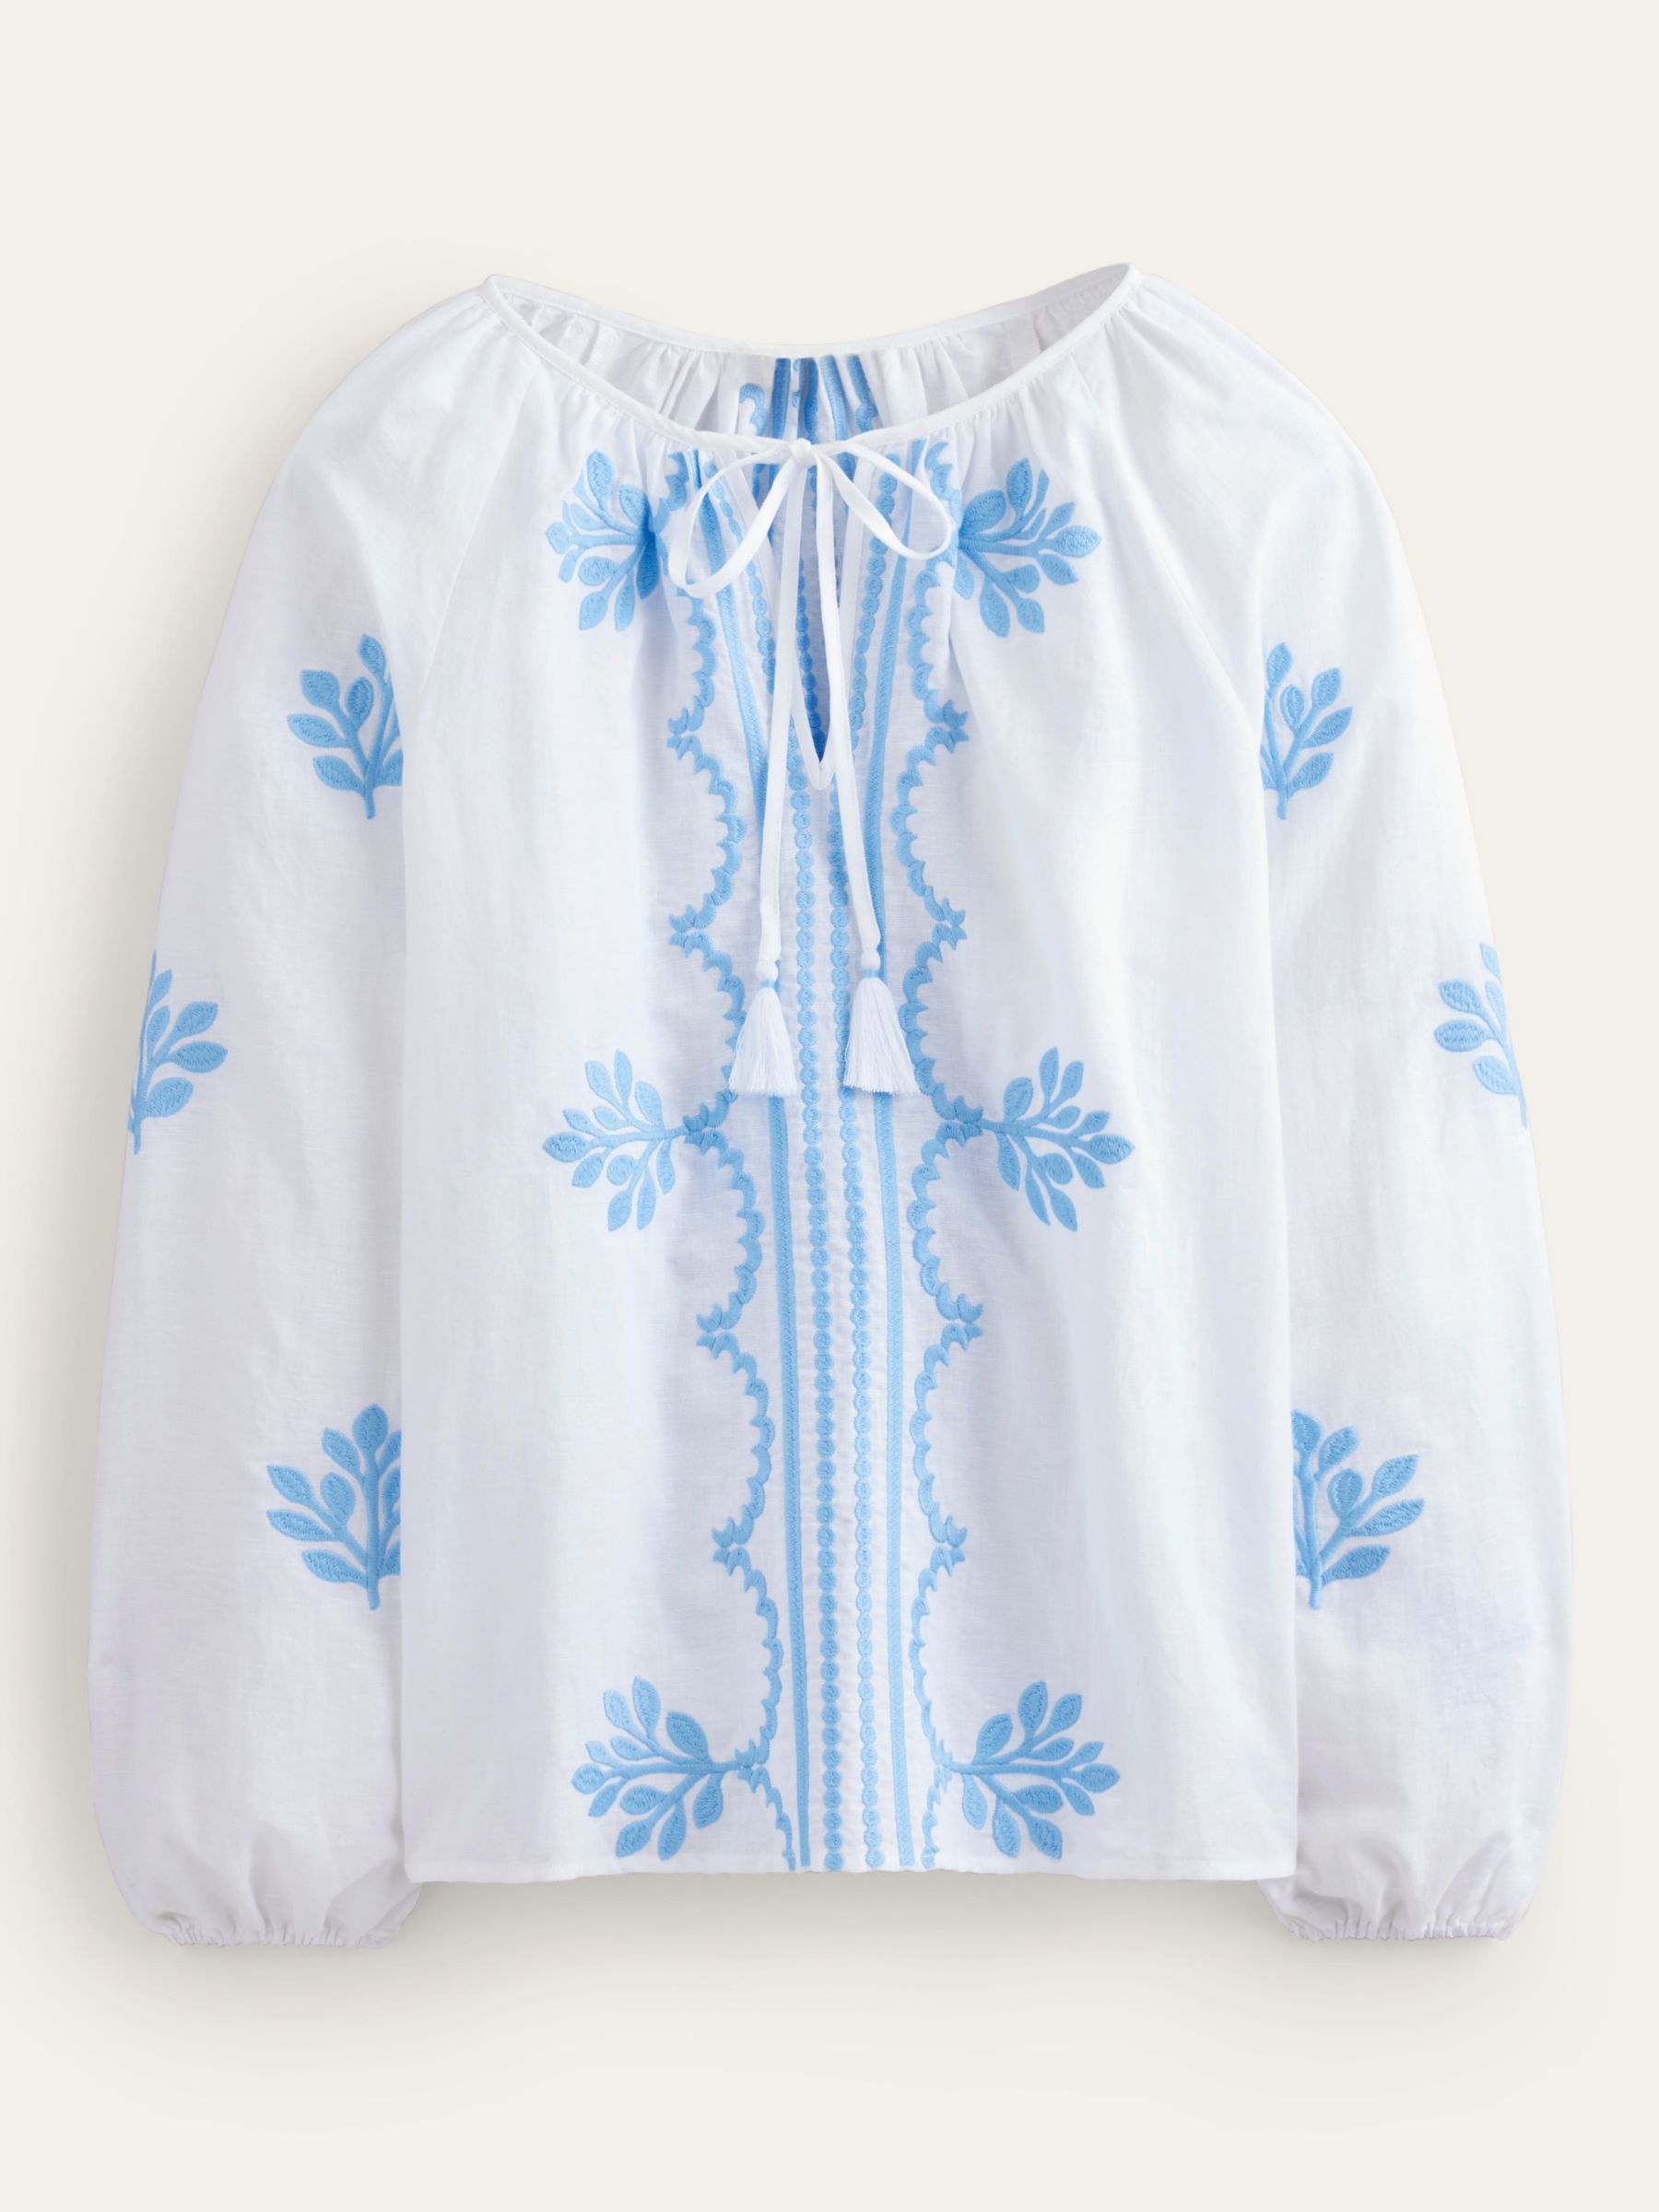 Boden Serena Embroidered Blouse, White/Blue, 16